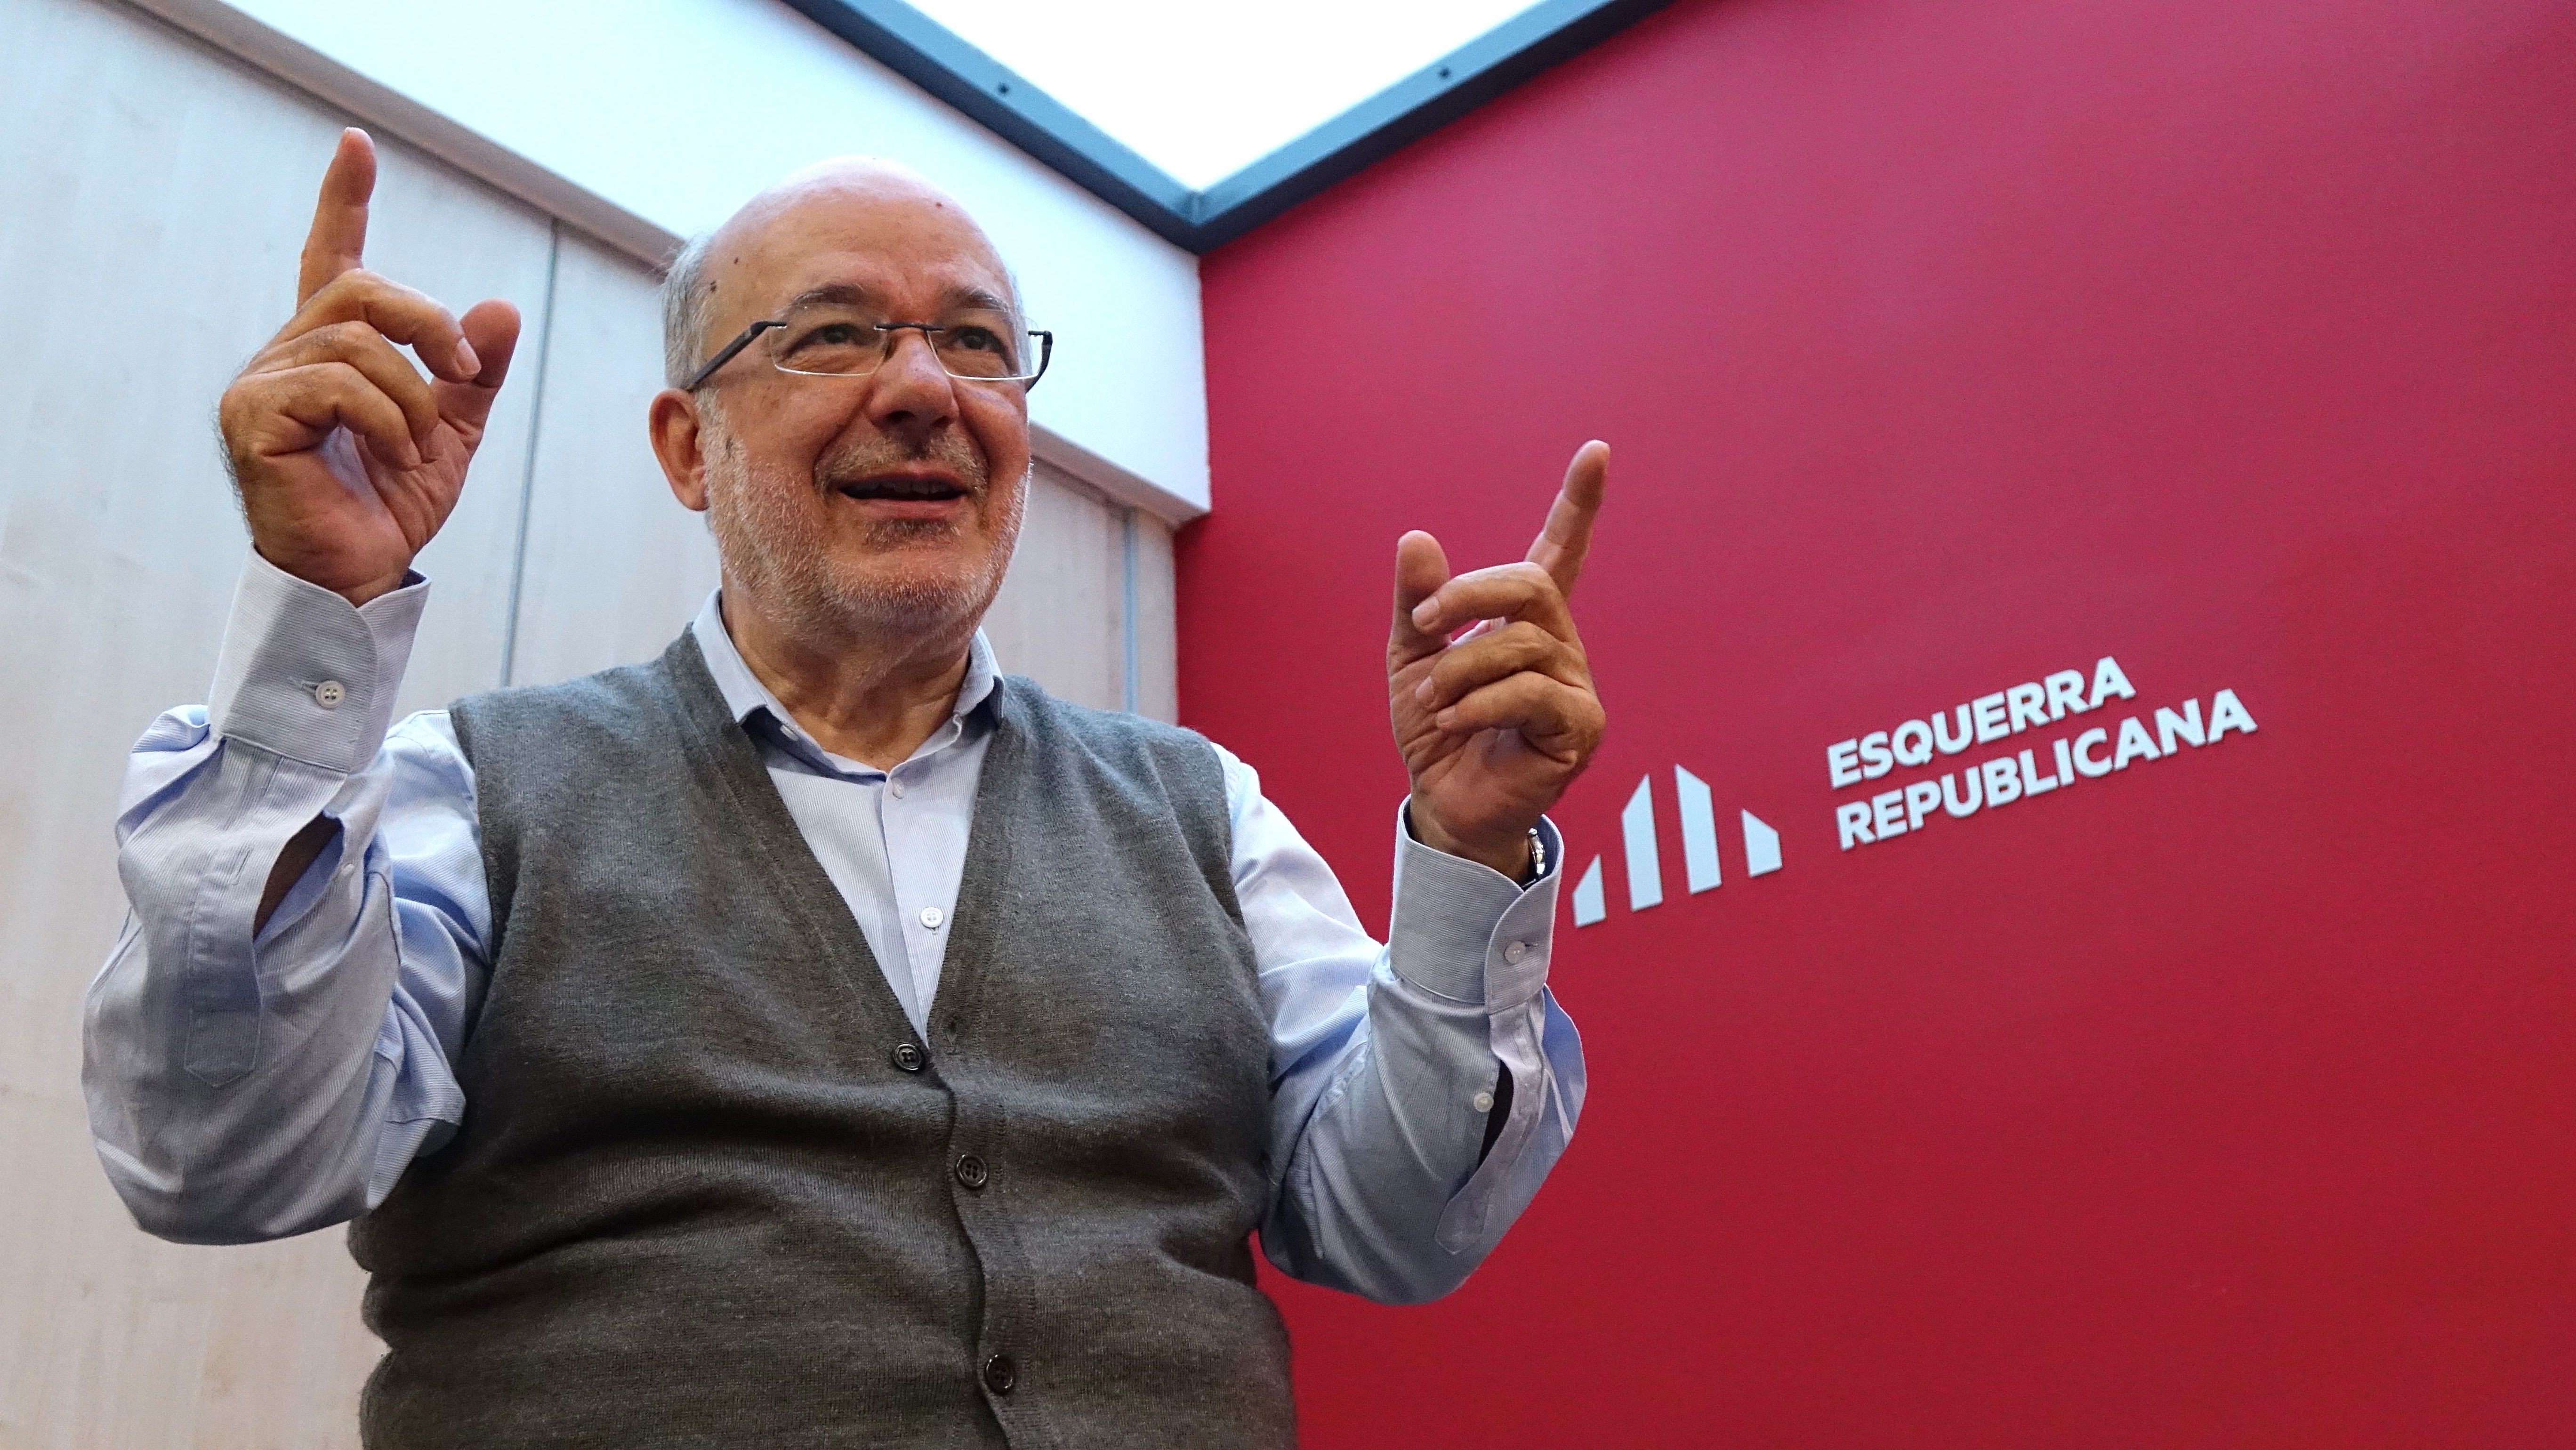 Muere el filósofo y exeurodiputado de ERC Josep Maria Terricabras